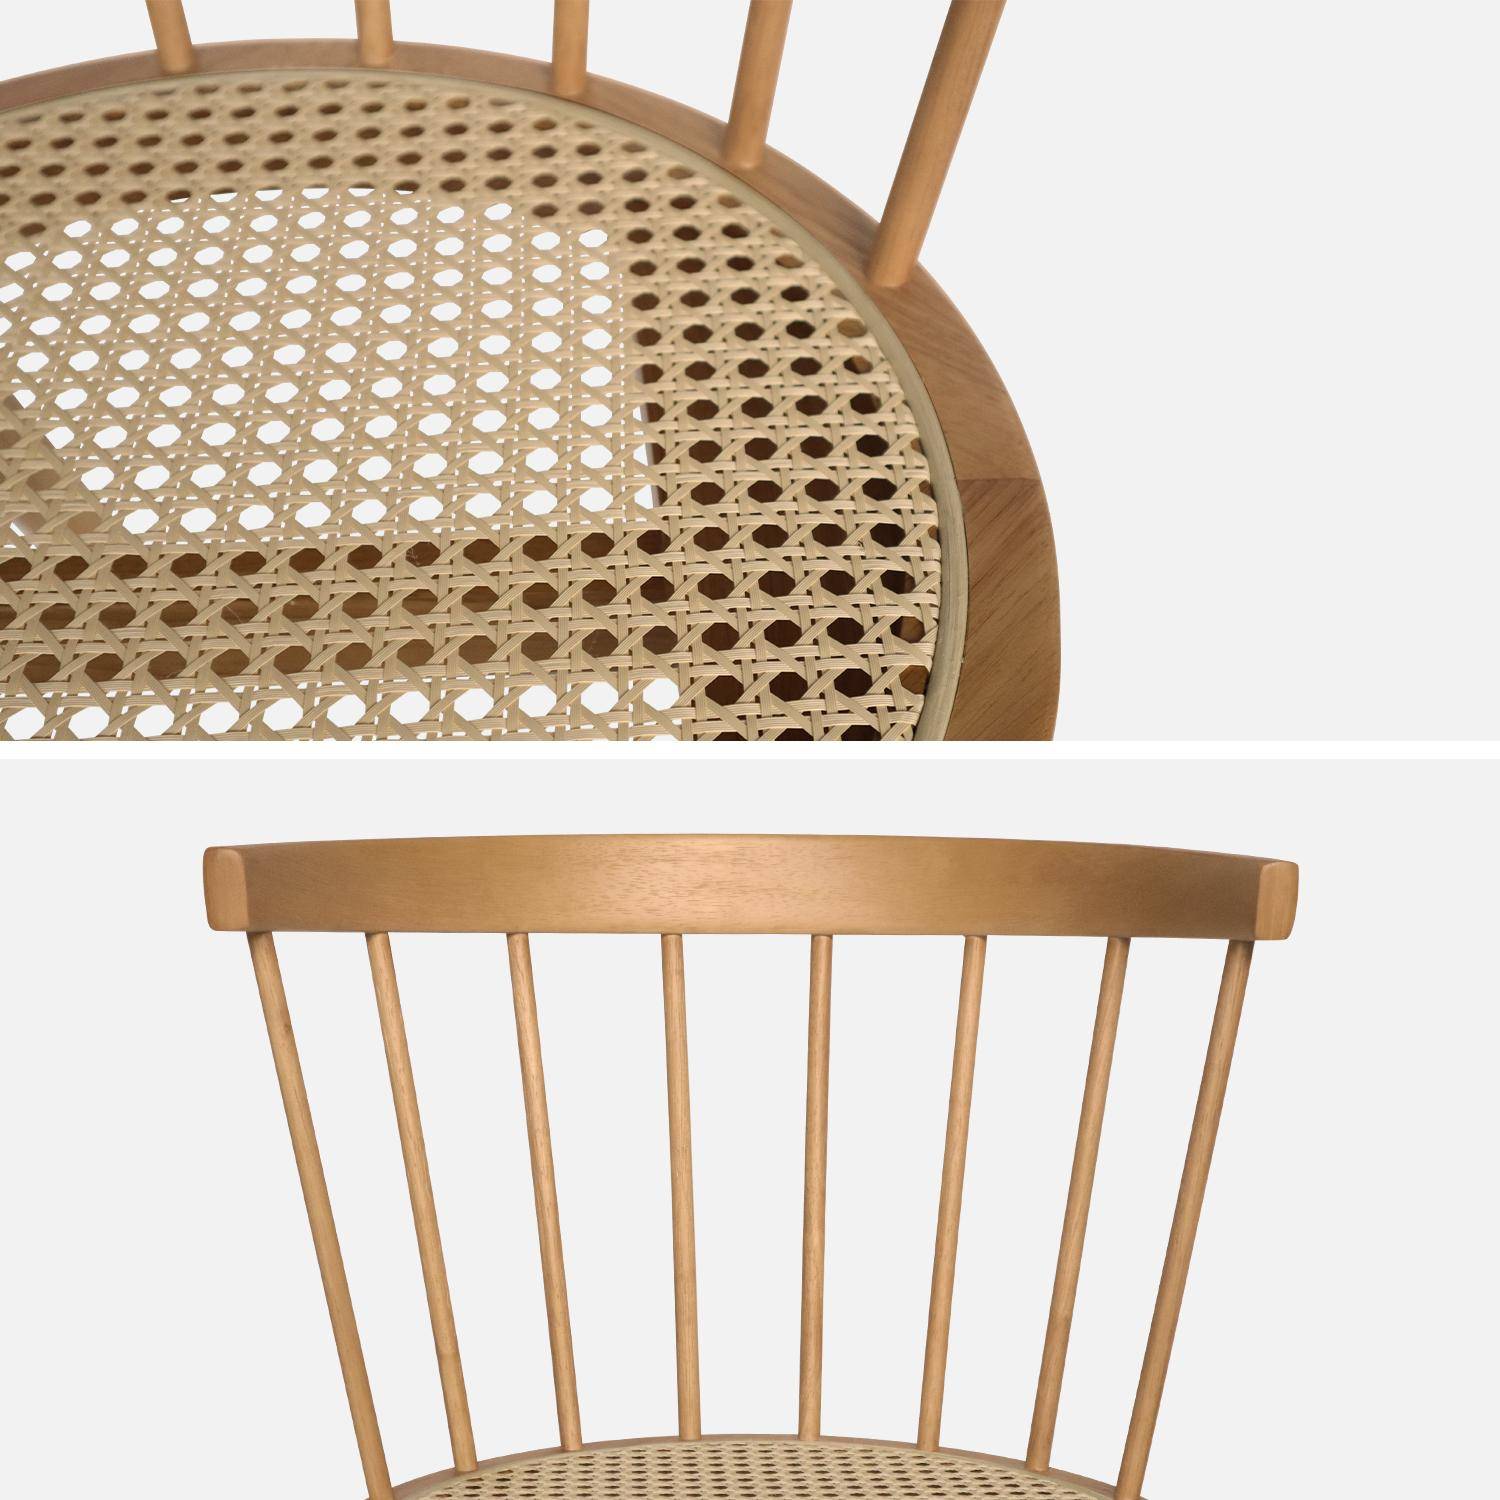 Pair of  Wood and Cane Chairs, Bohemian Spirit, Natural, L53 x W53.5 x H 6 cm,sweeek,Photo7